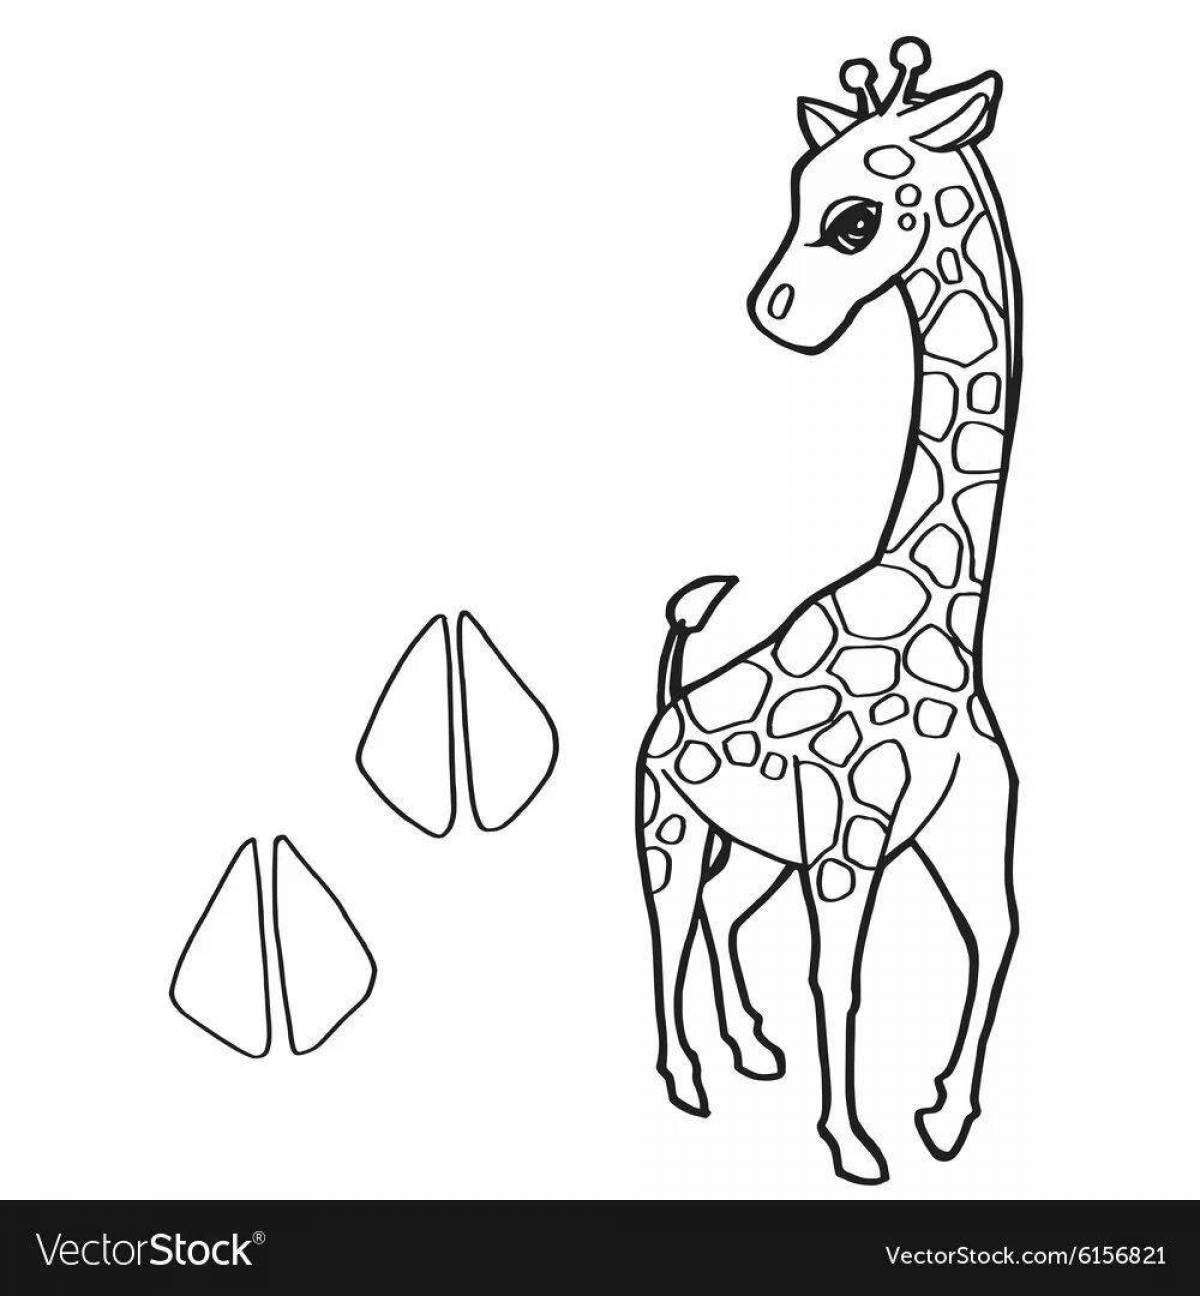 Animated giraffe adopt mi ​​coloring page